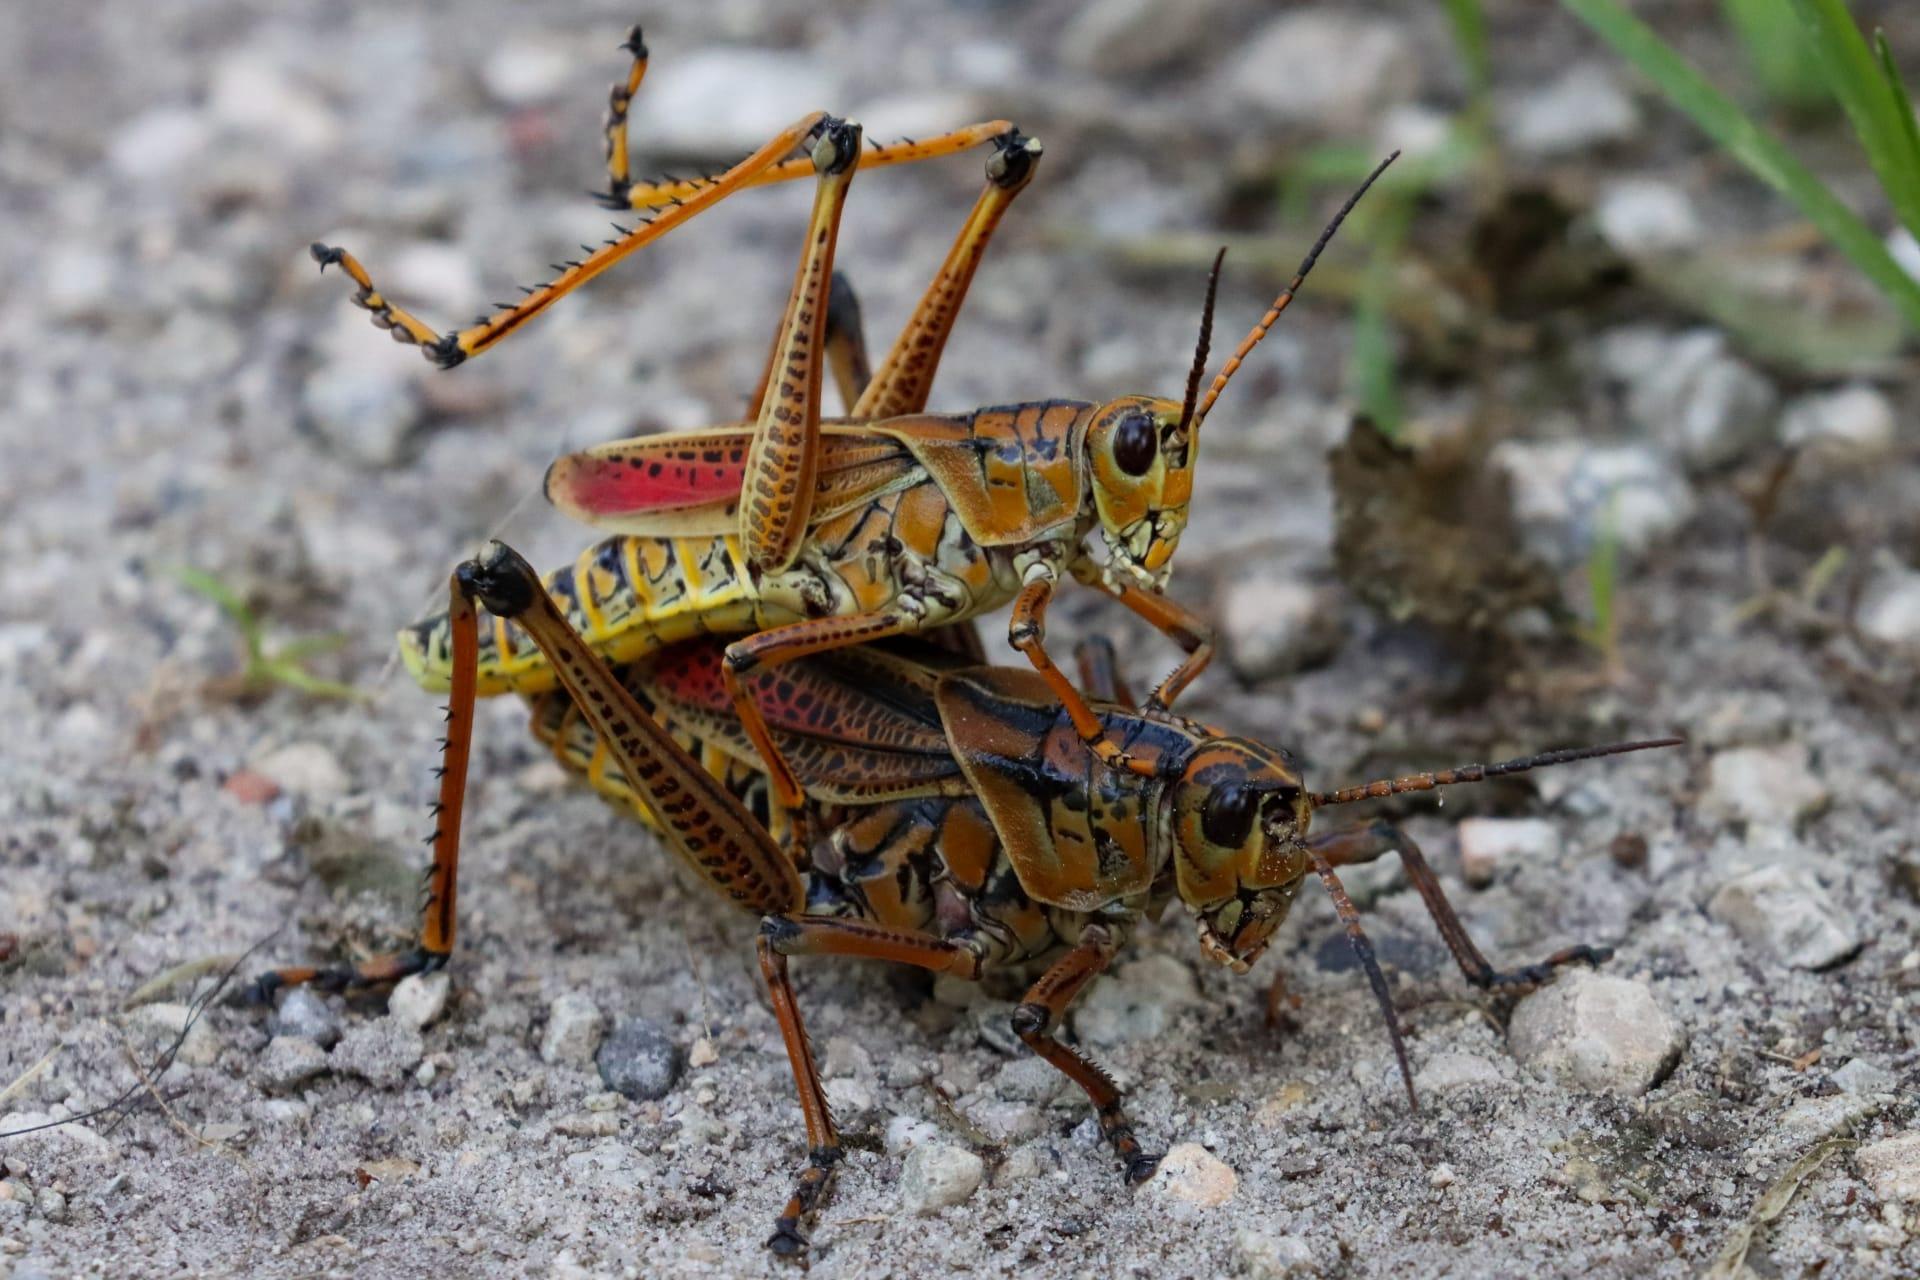 Lubber grasshopper pictures